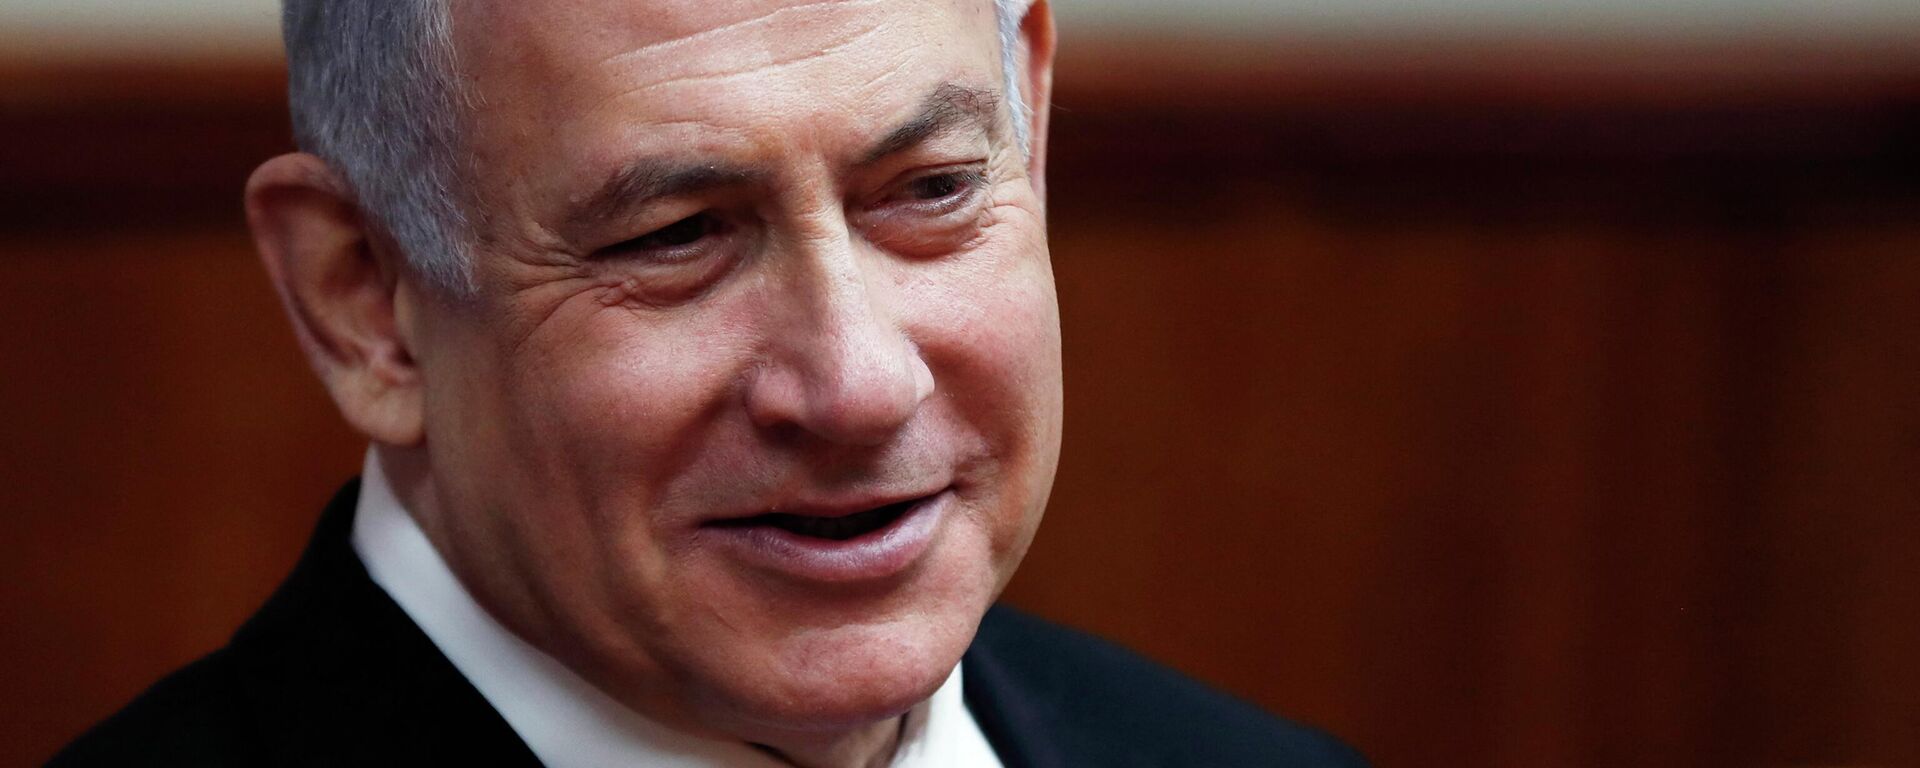 FILE PHOTO: Israeli Prime Minister Benjamin Netanyahu smiles during the weekly cabinet meeting in Jerusalem December 8, 2019.  - Sputnik International, 1920, 03.11.2022